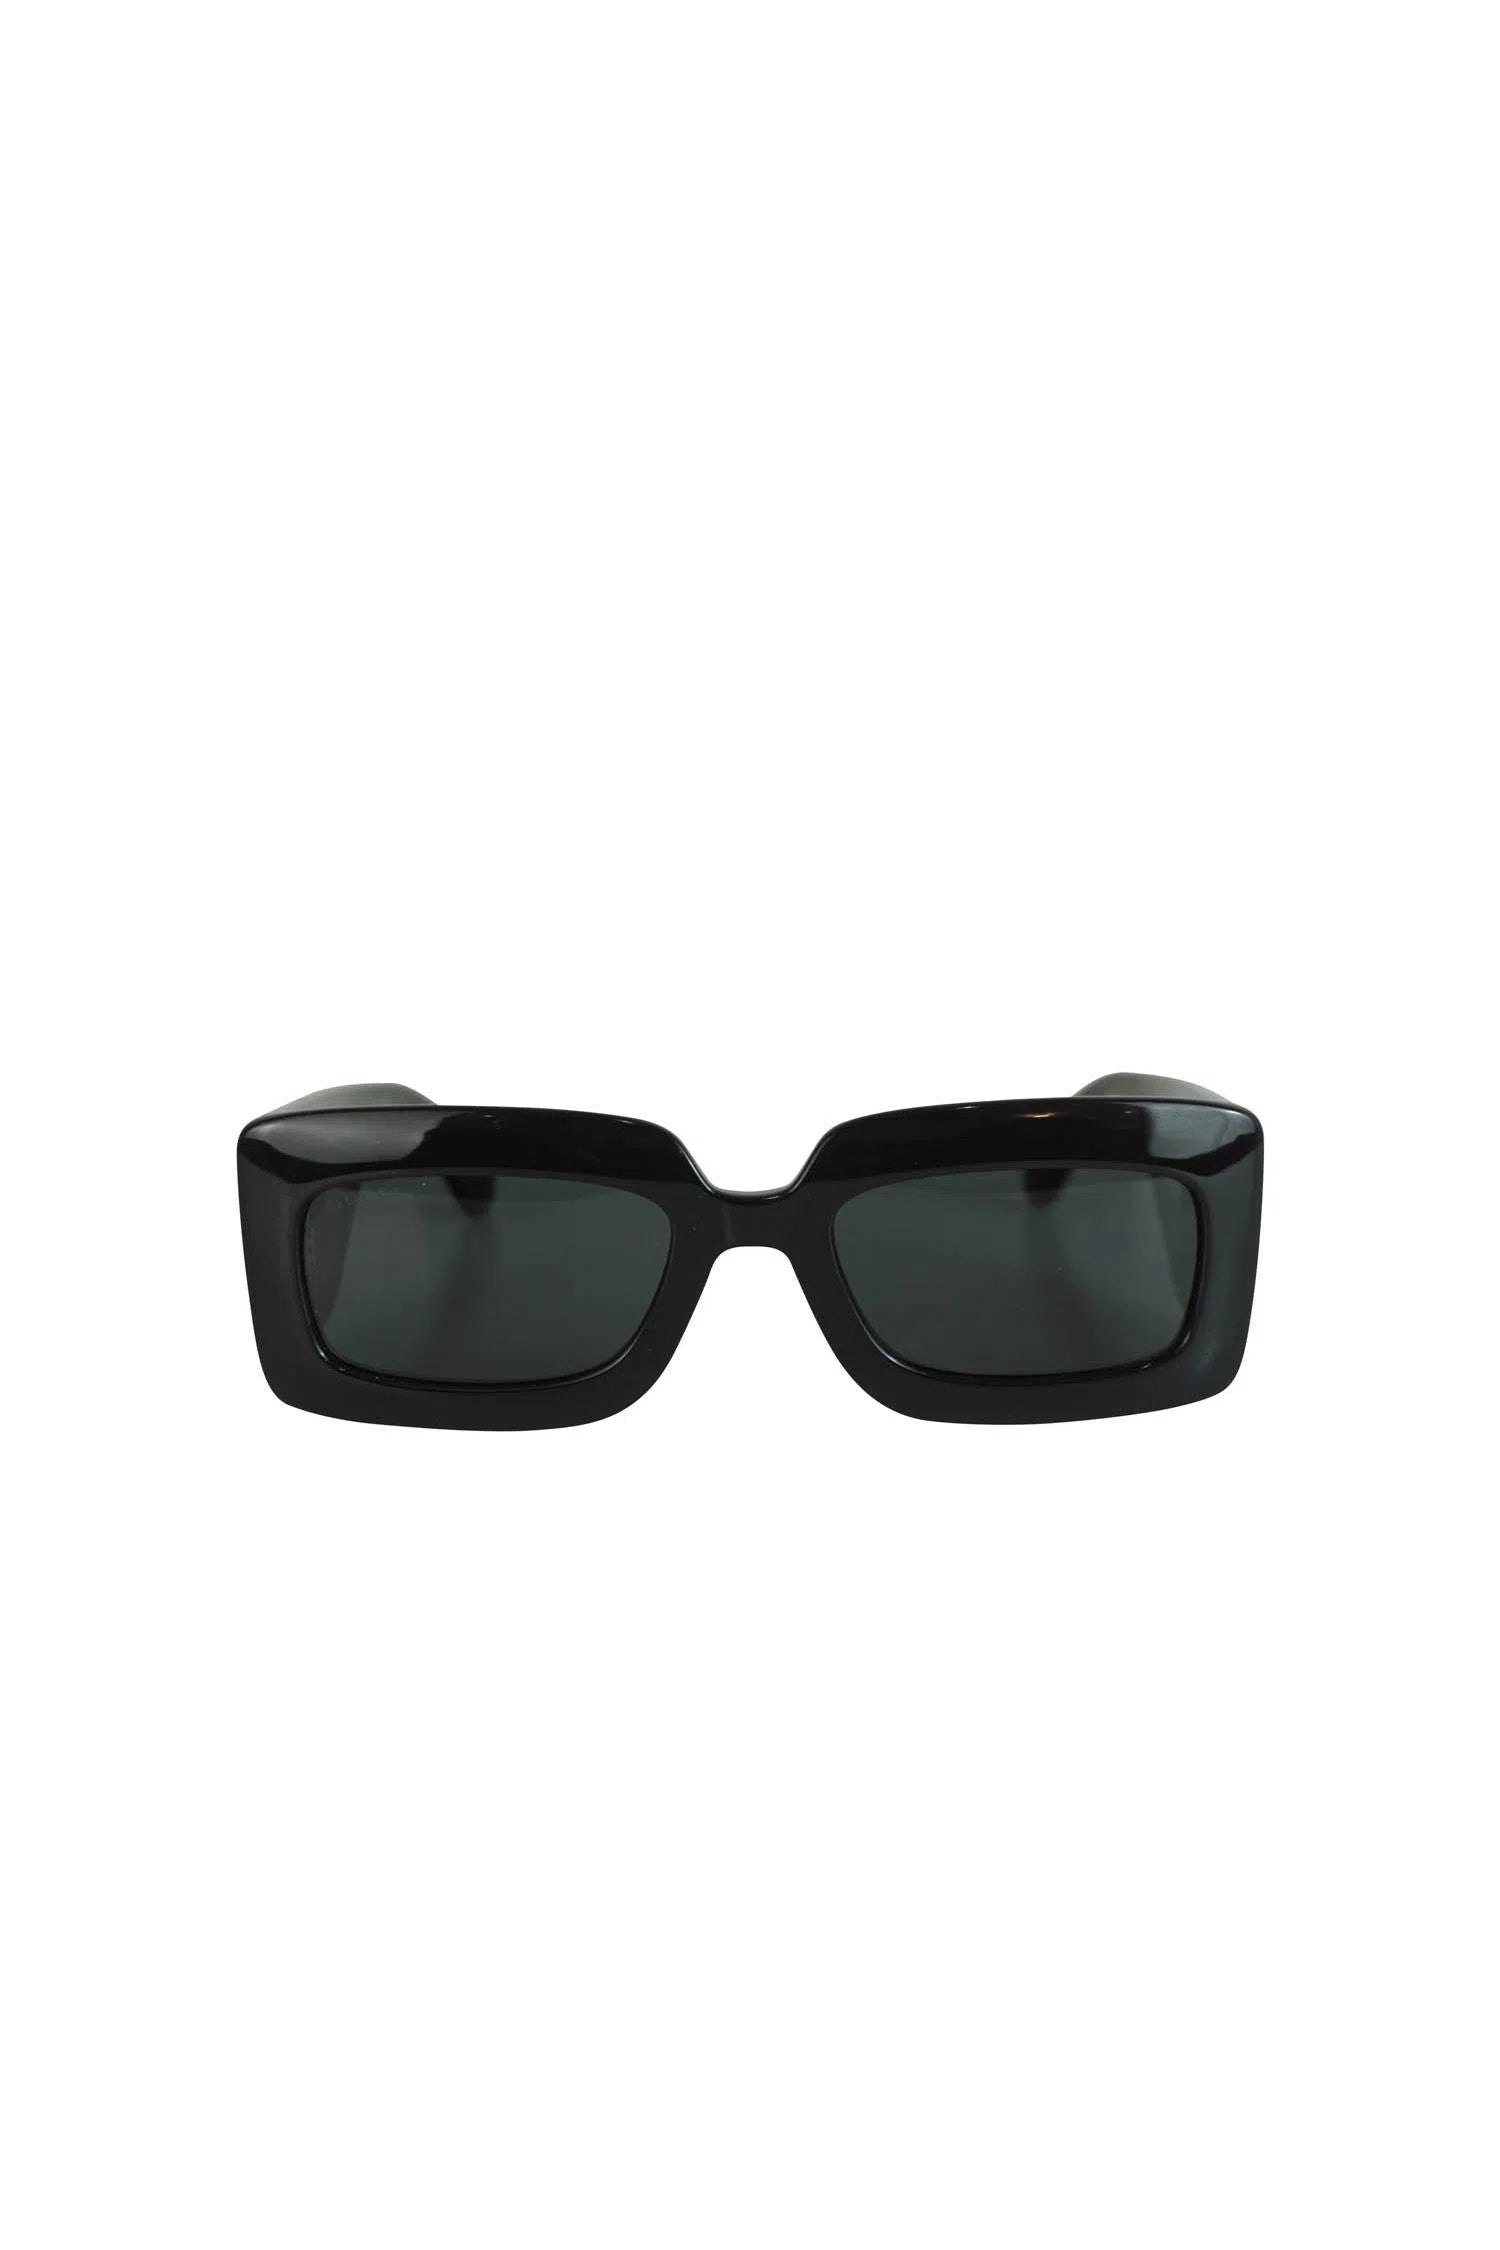 Gucci Marmont Black and Gold Sunglasses - Foxy Couture Carmel